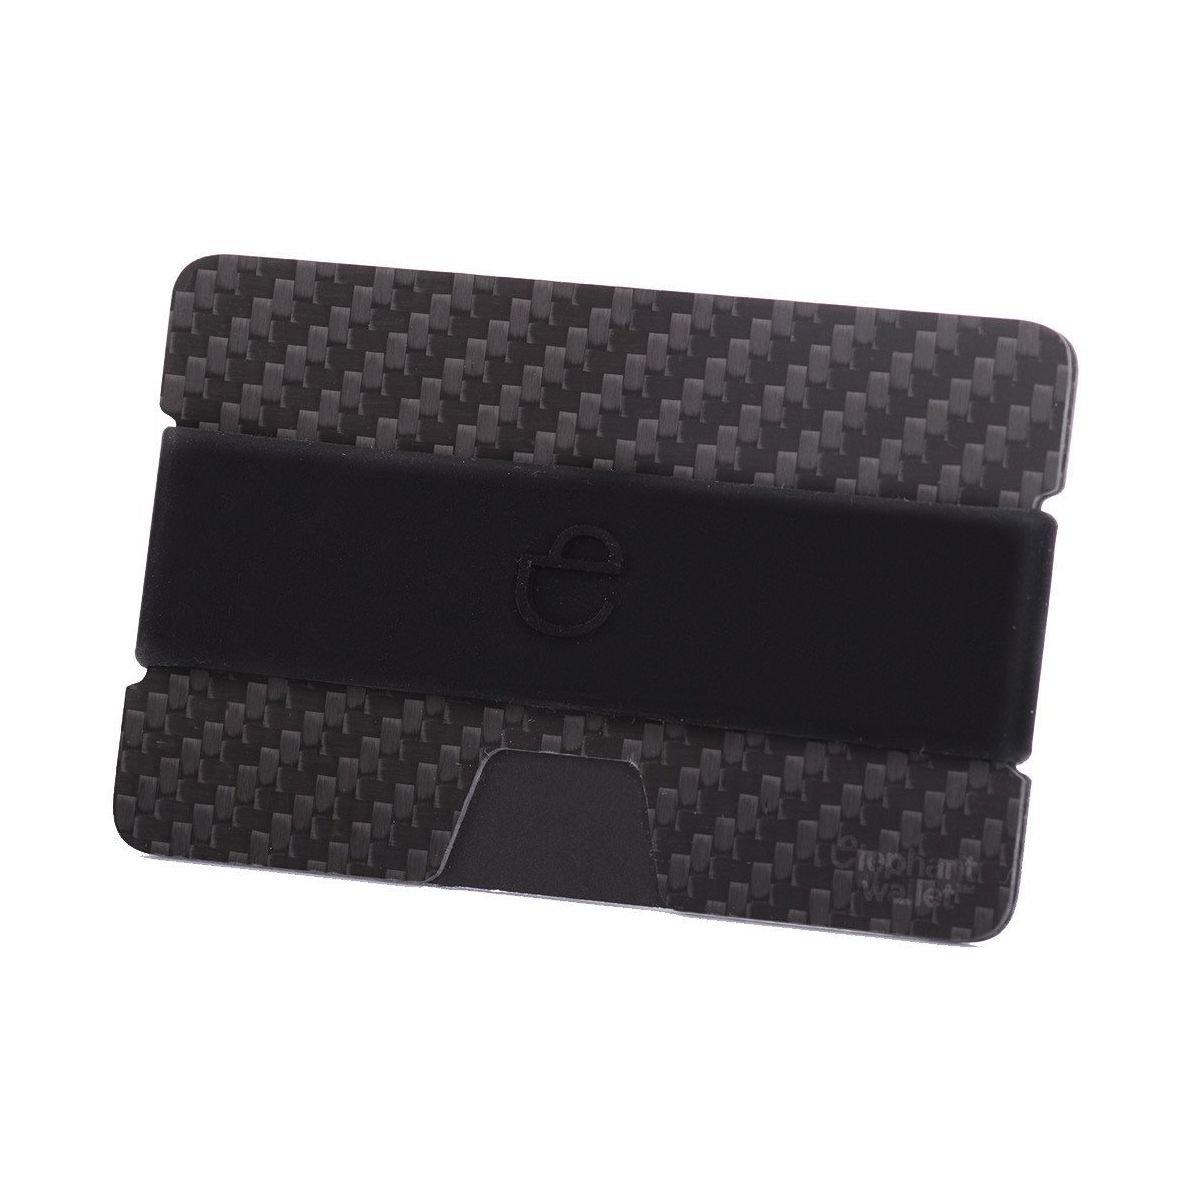 elephant Minimalist Carbon Fiber Wallet with Silicone Strap - Carbon/Black